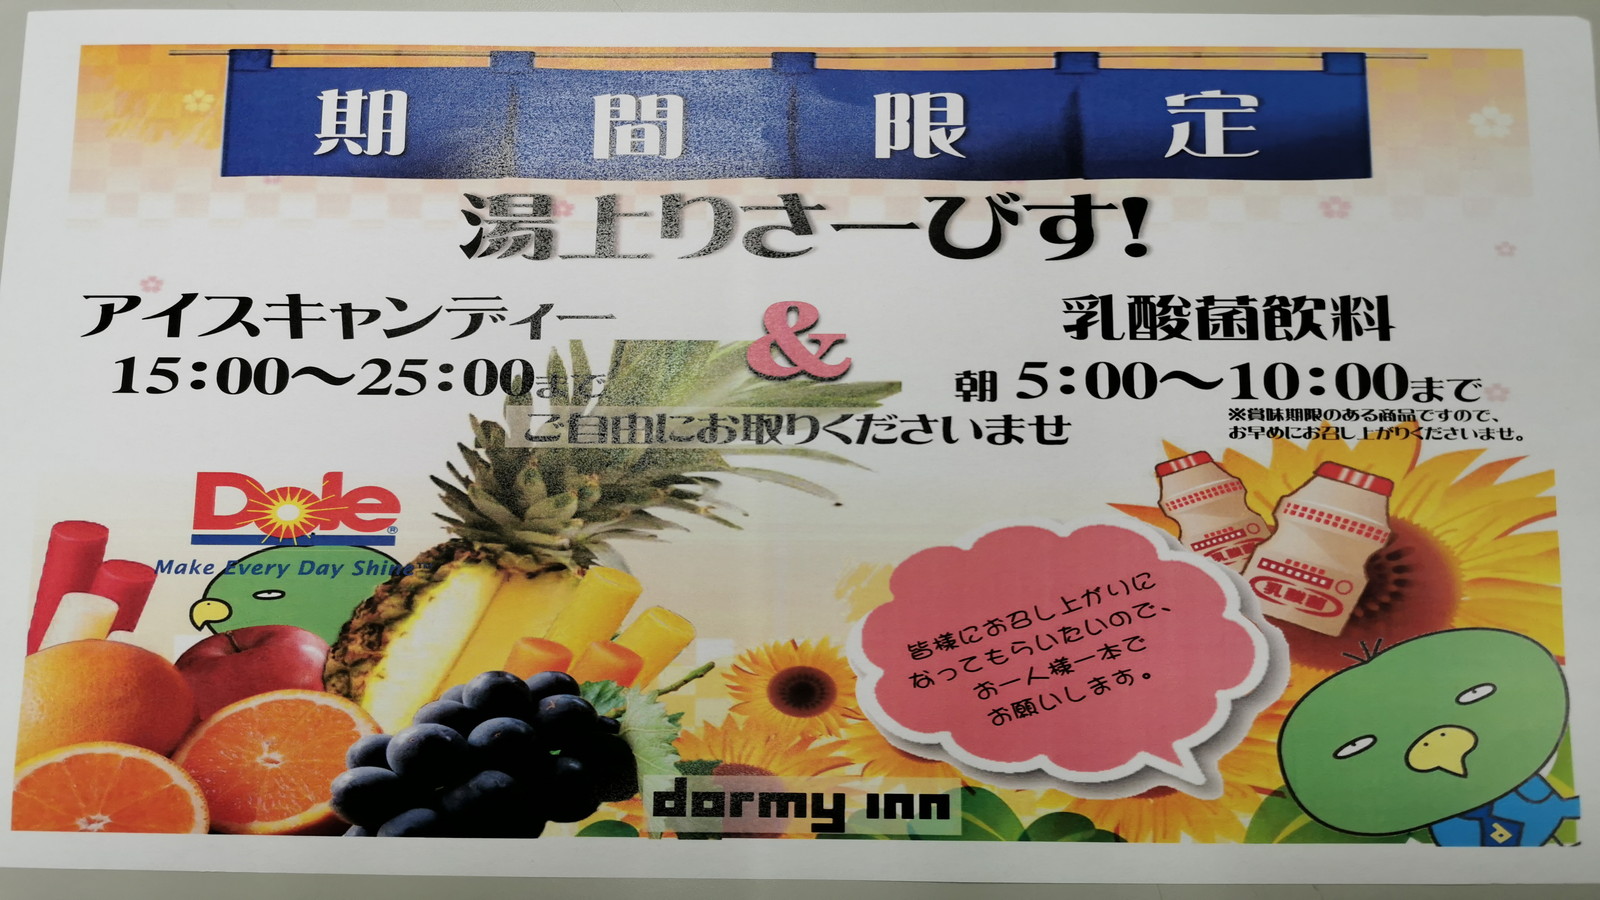 千葉 City Soga Dormy Inn